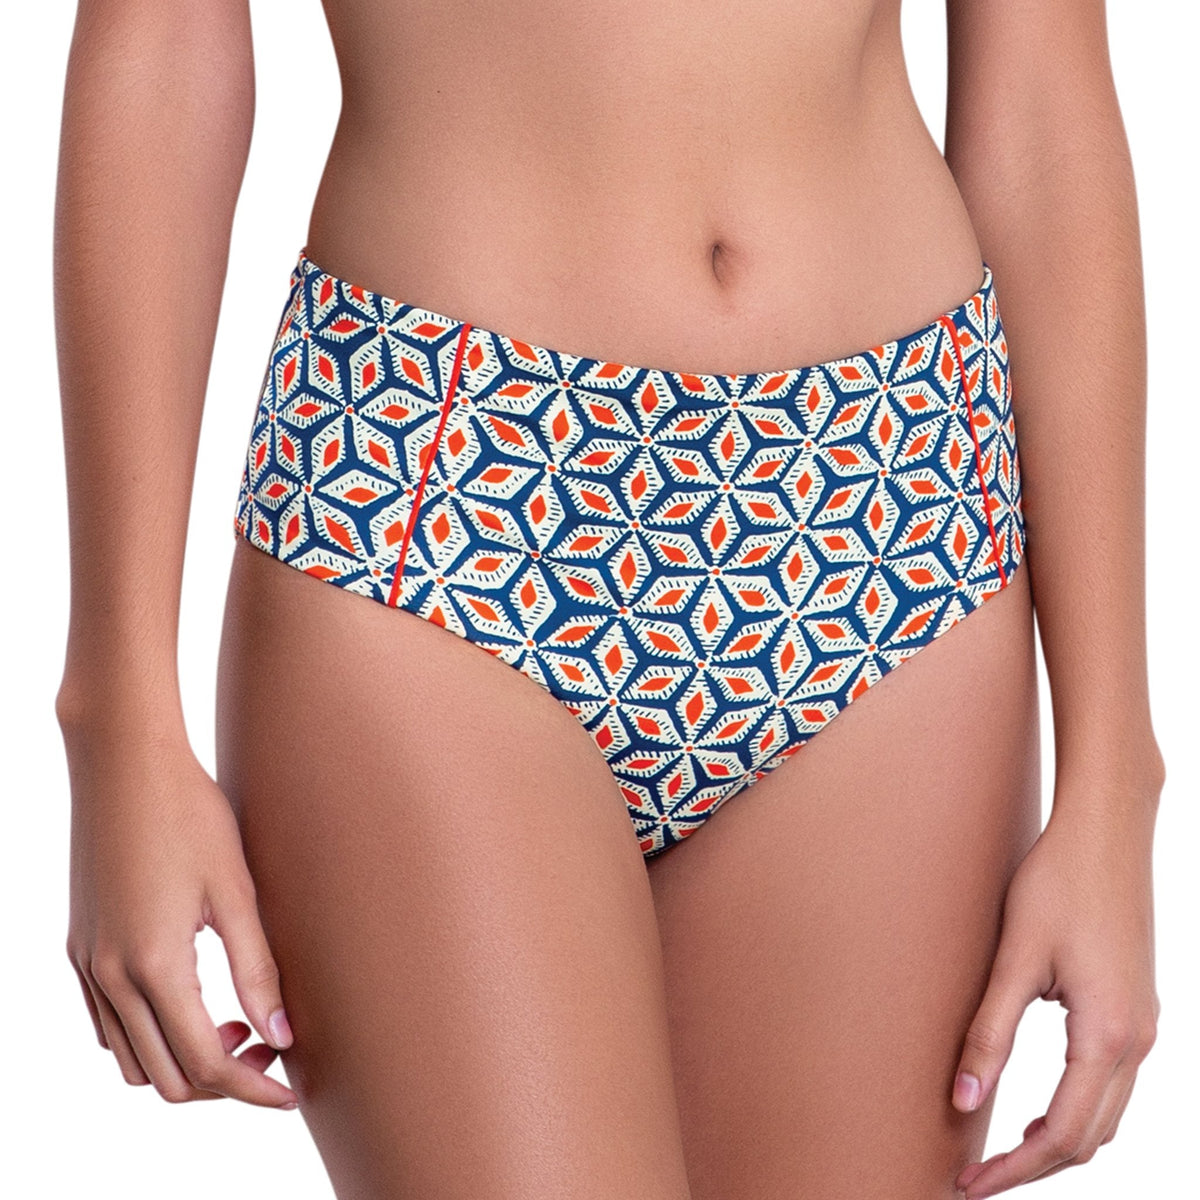 B√âR√âNICE high rise panty, printed bikini bottom by ALMA swimwear ‚Äì front view 2